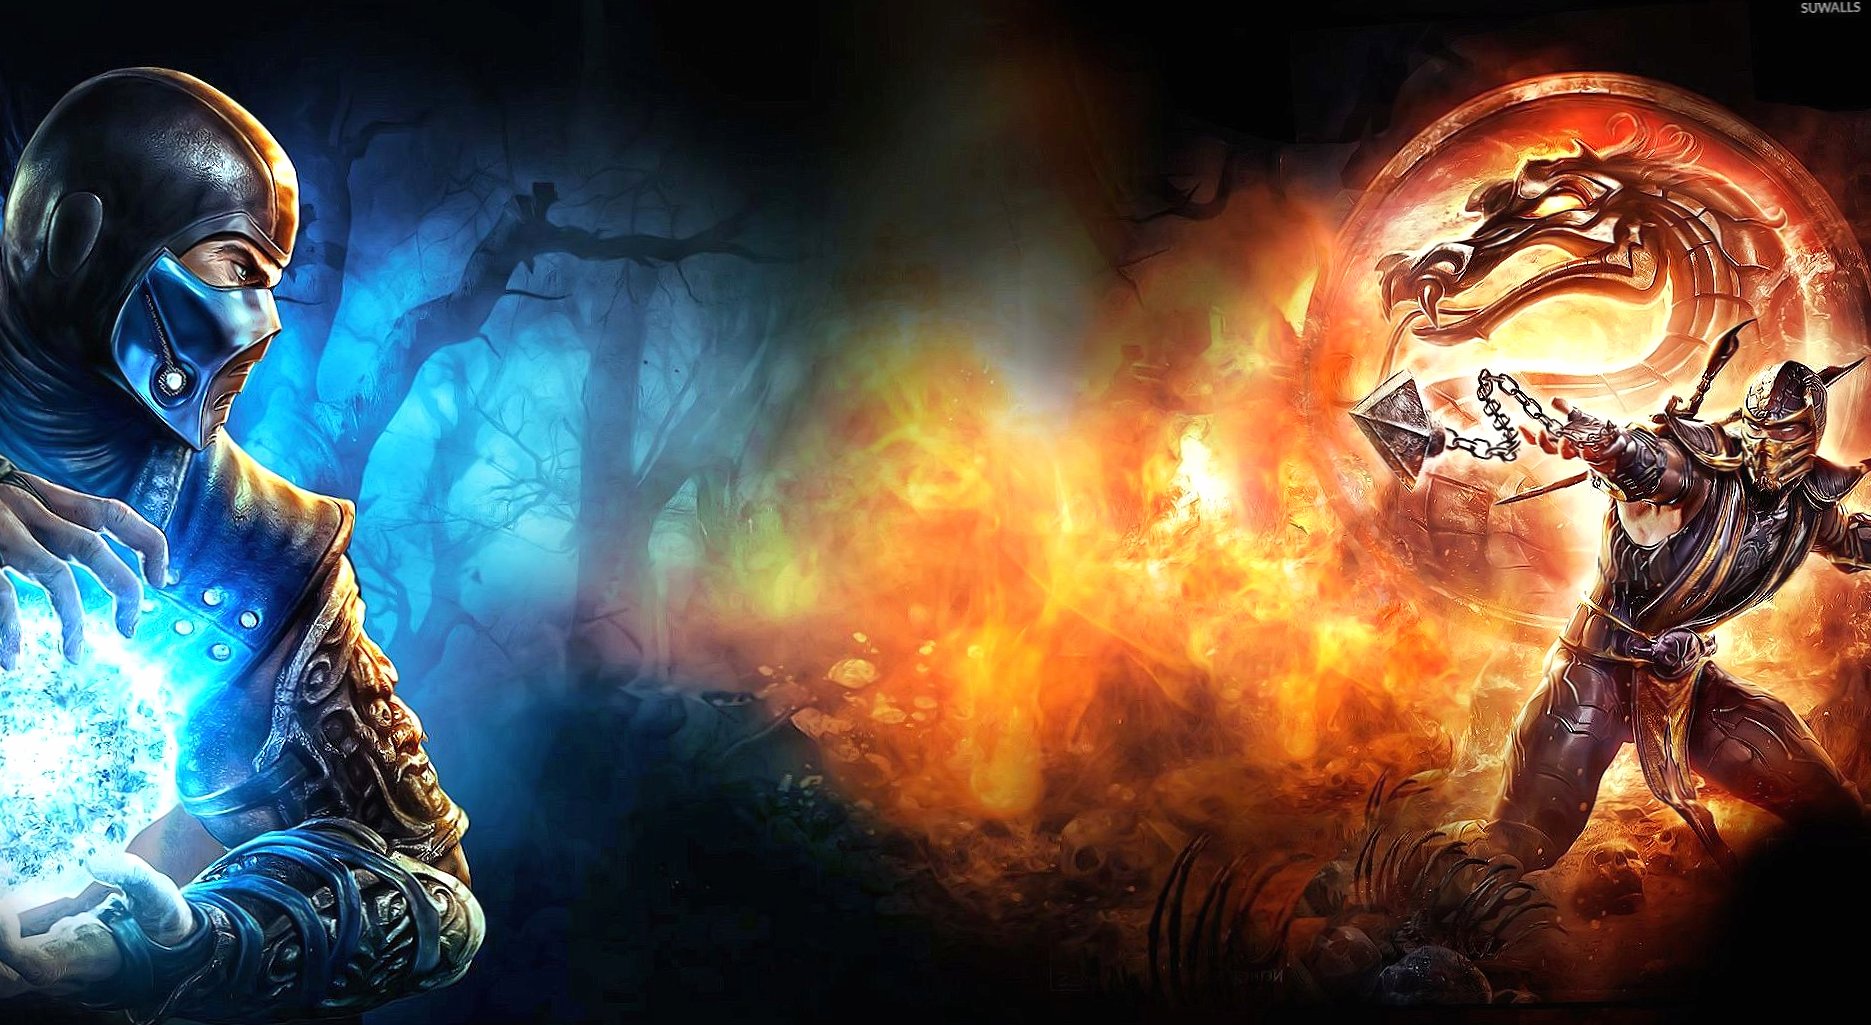 Sub-Zero vs Scorpion in Mortal Kombat X wallpapers HD quality